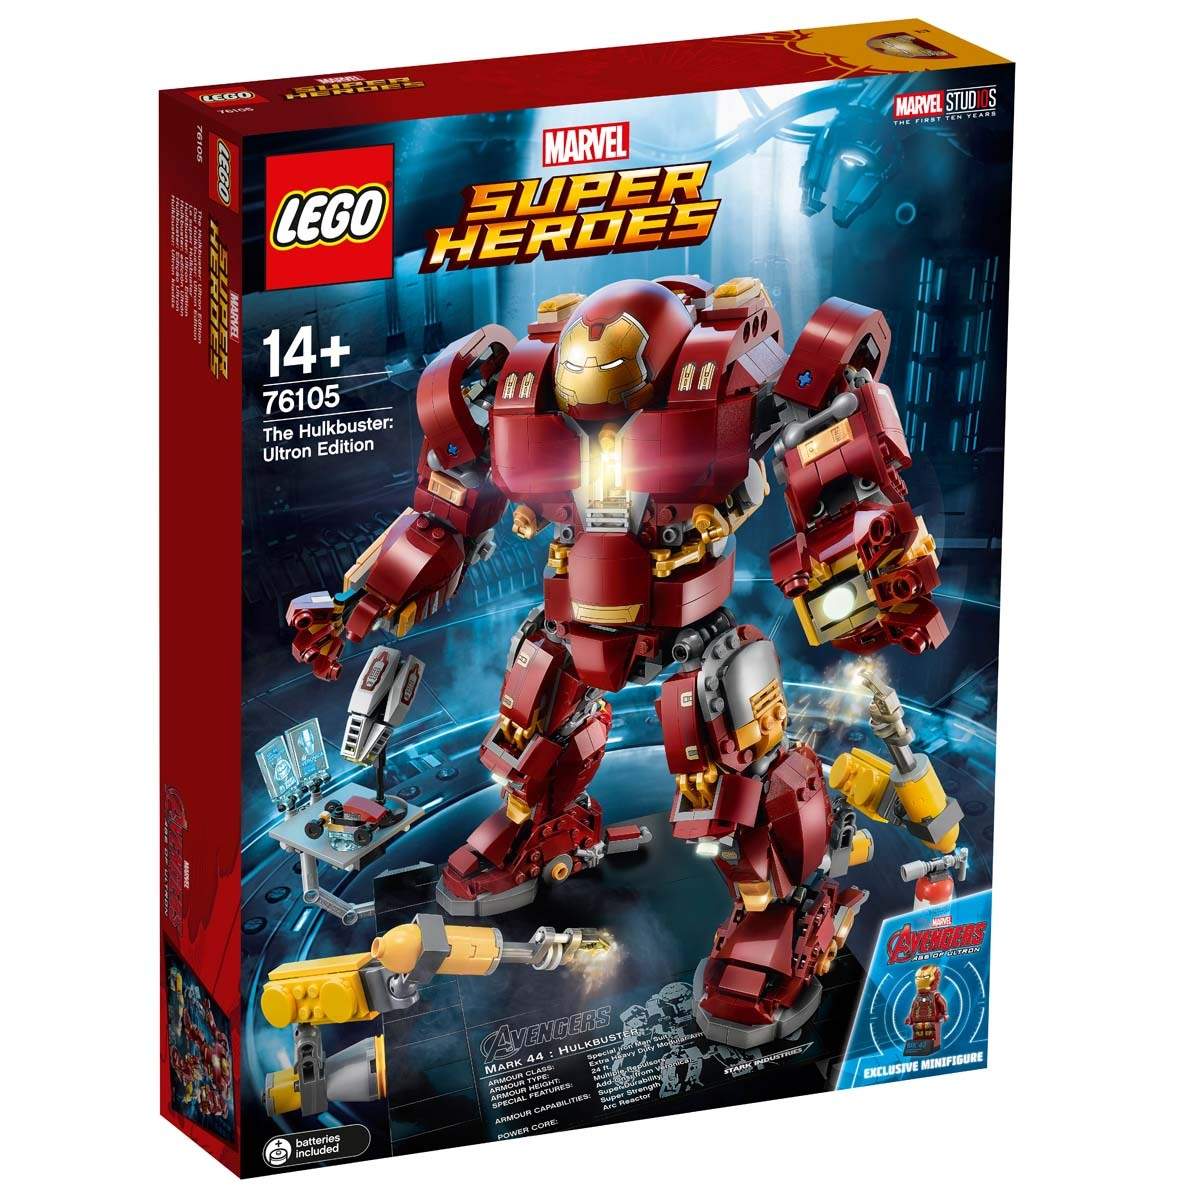 check-out-this-incredibly-cool-iron-man-hulkbuster-lego-playset6.jpeg